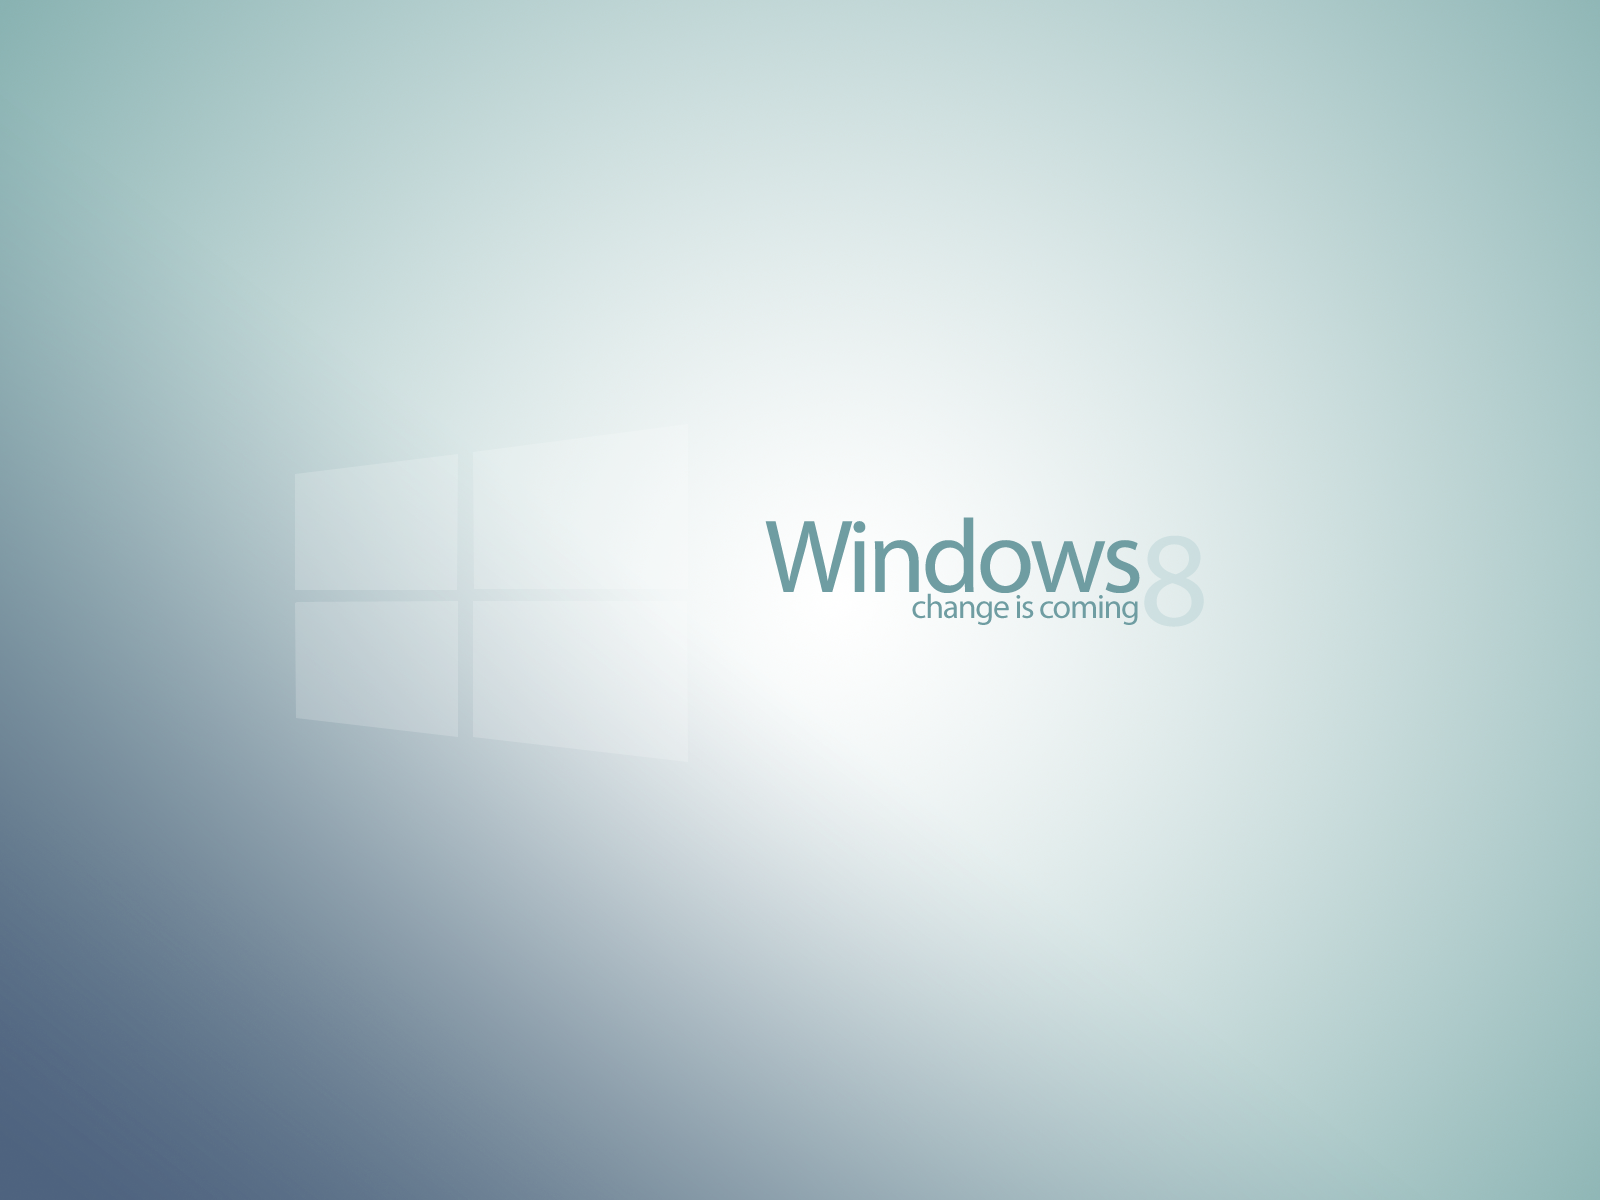 Windows 8 Concept New Logo Wallpaper #3